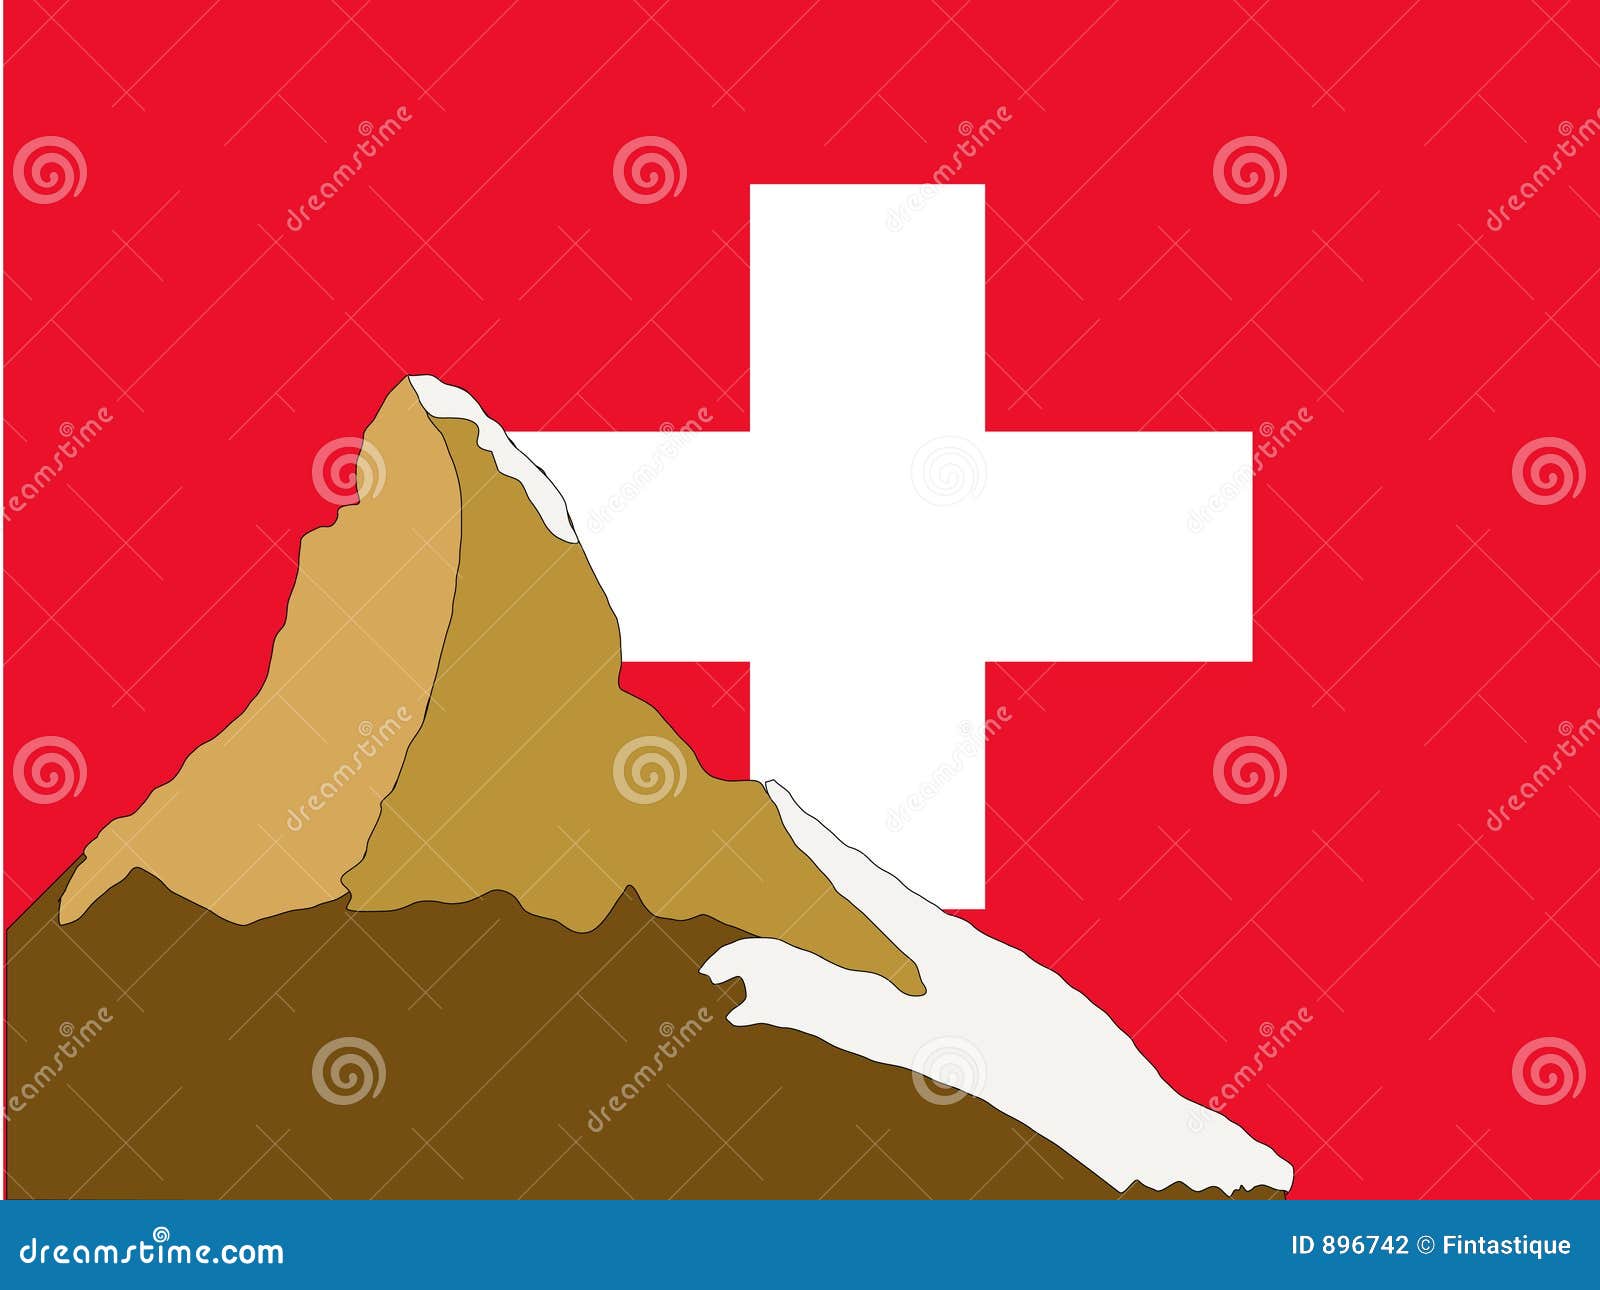 clip art flag of switzerland - photo #41